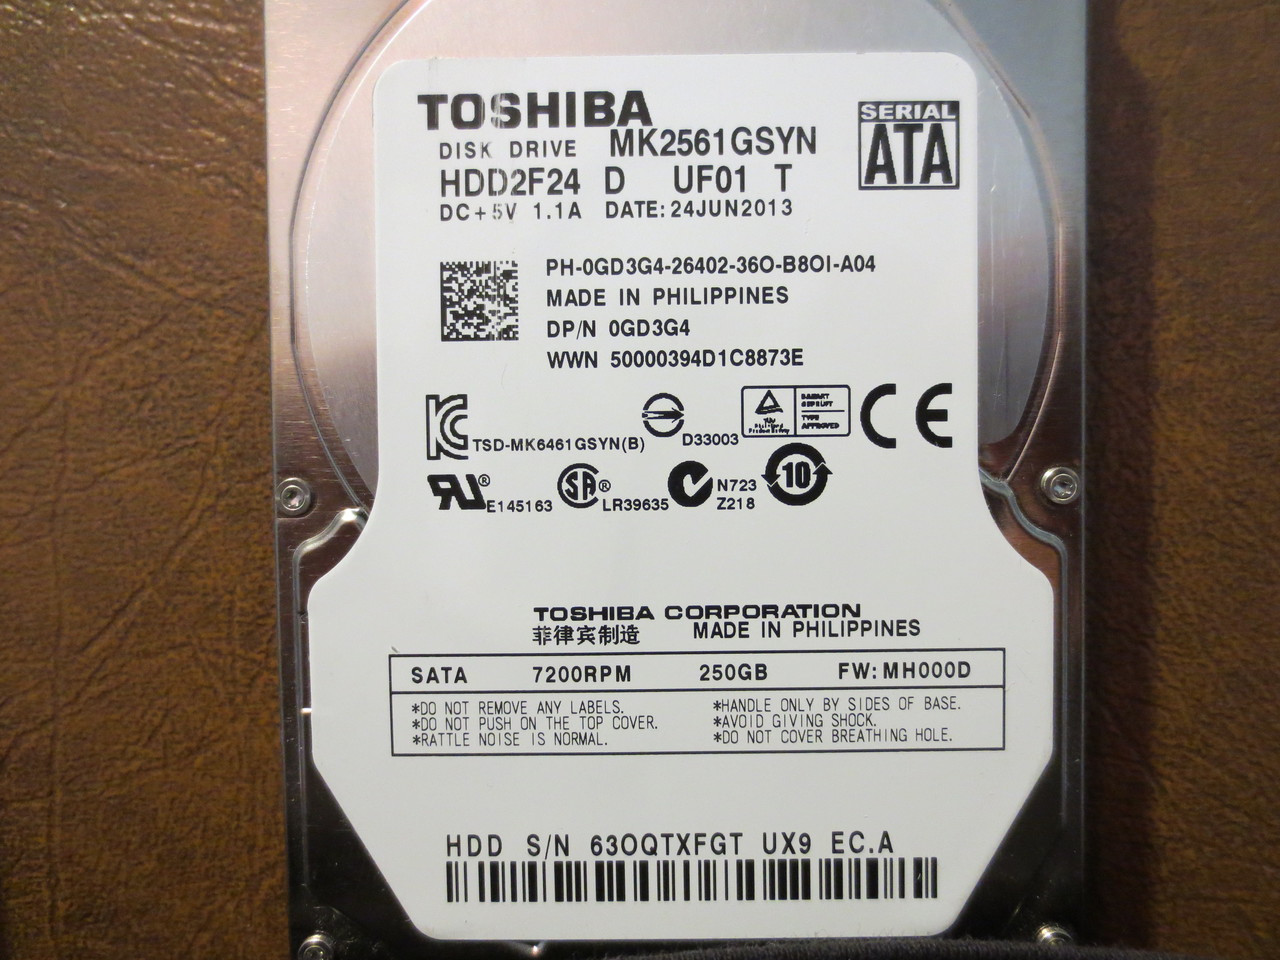 Toshiba MK2561GSYN HDD2F24 D UF01 T FW:MH000D 250gb Sata - Effective  Electronics